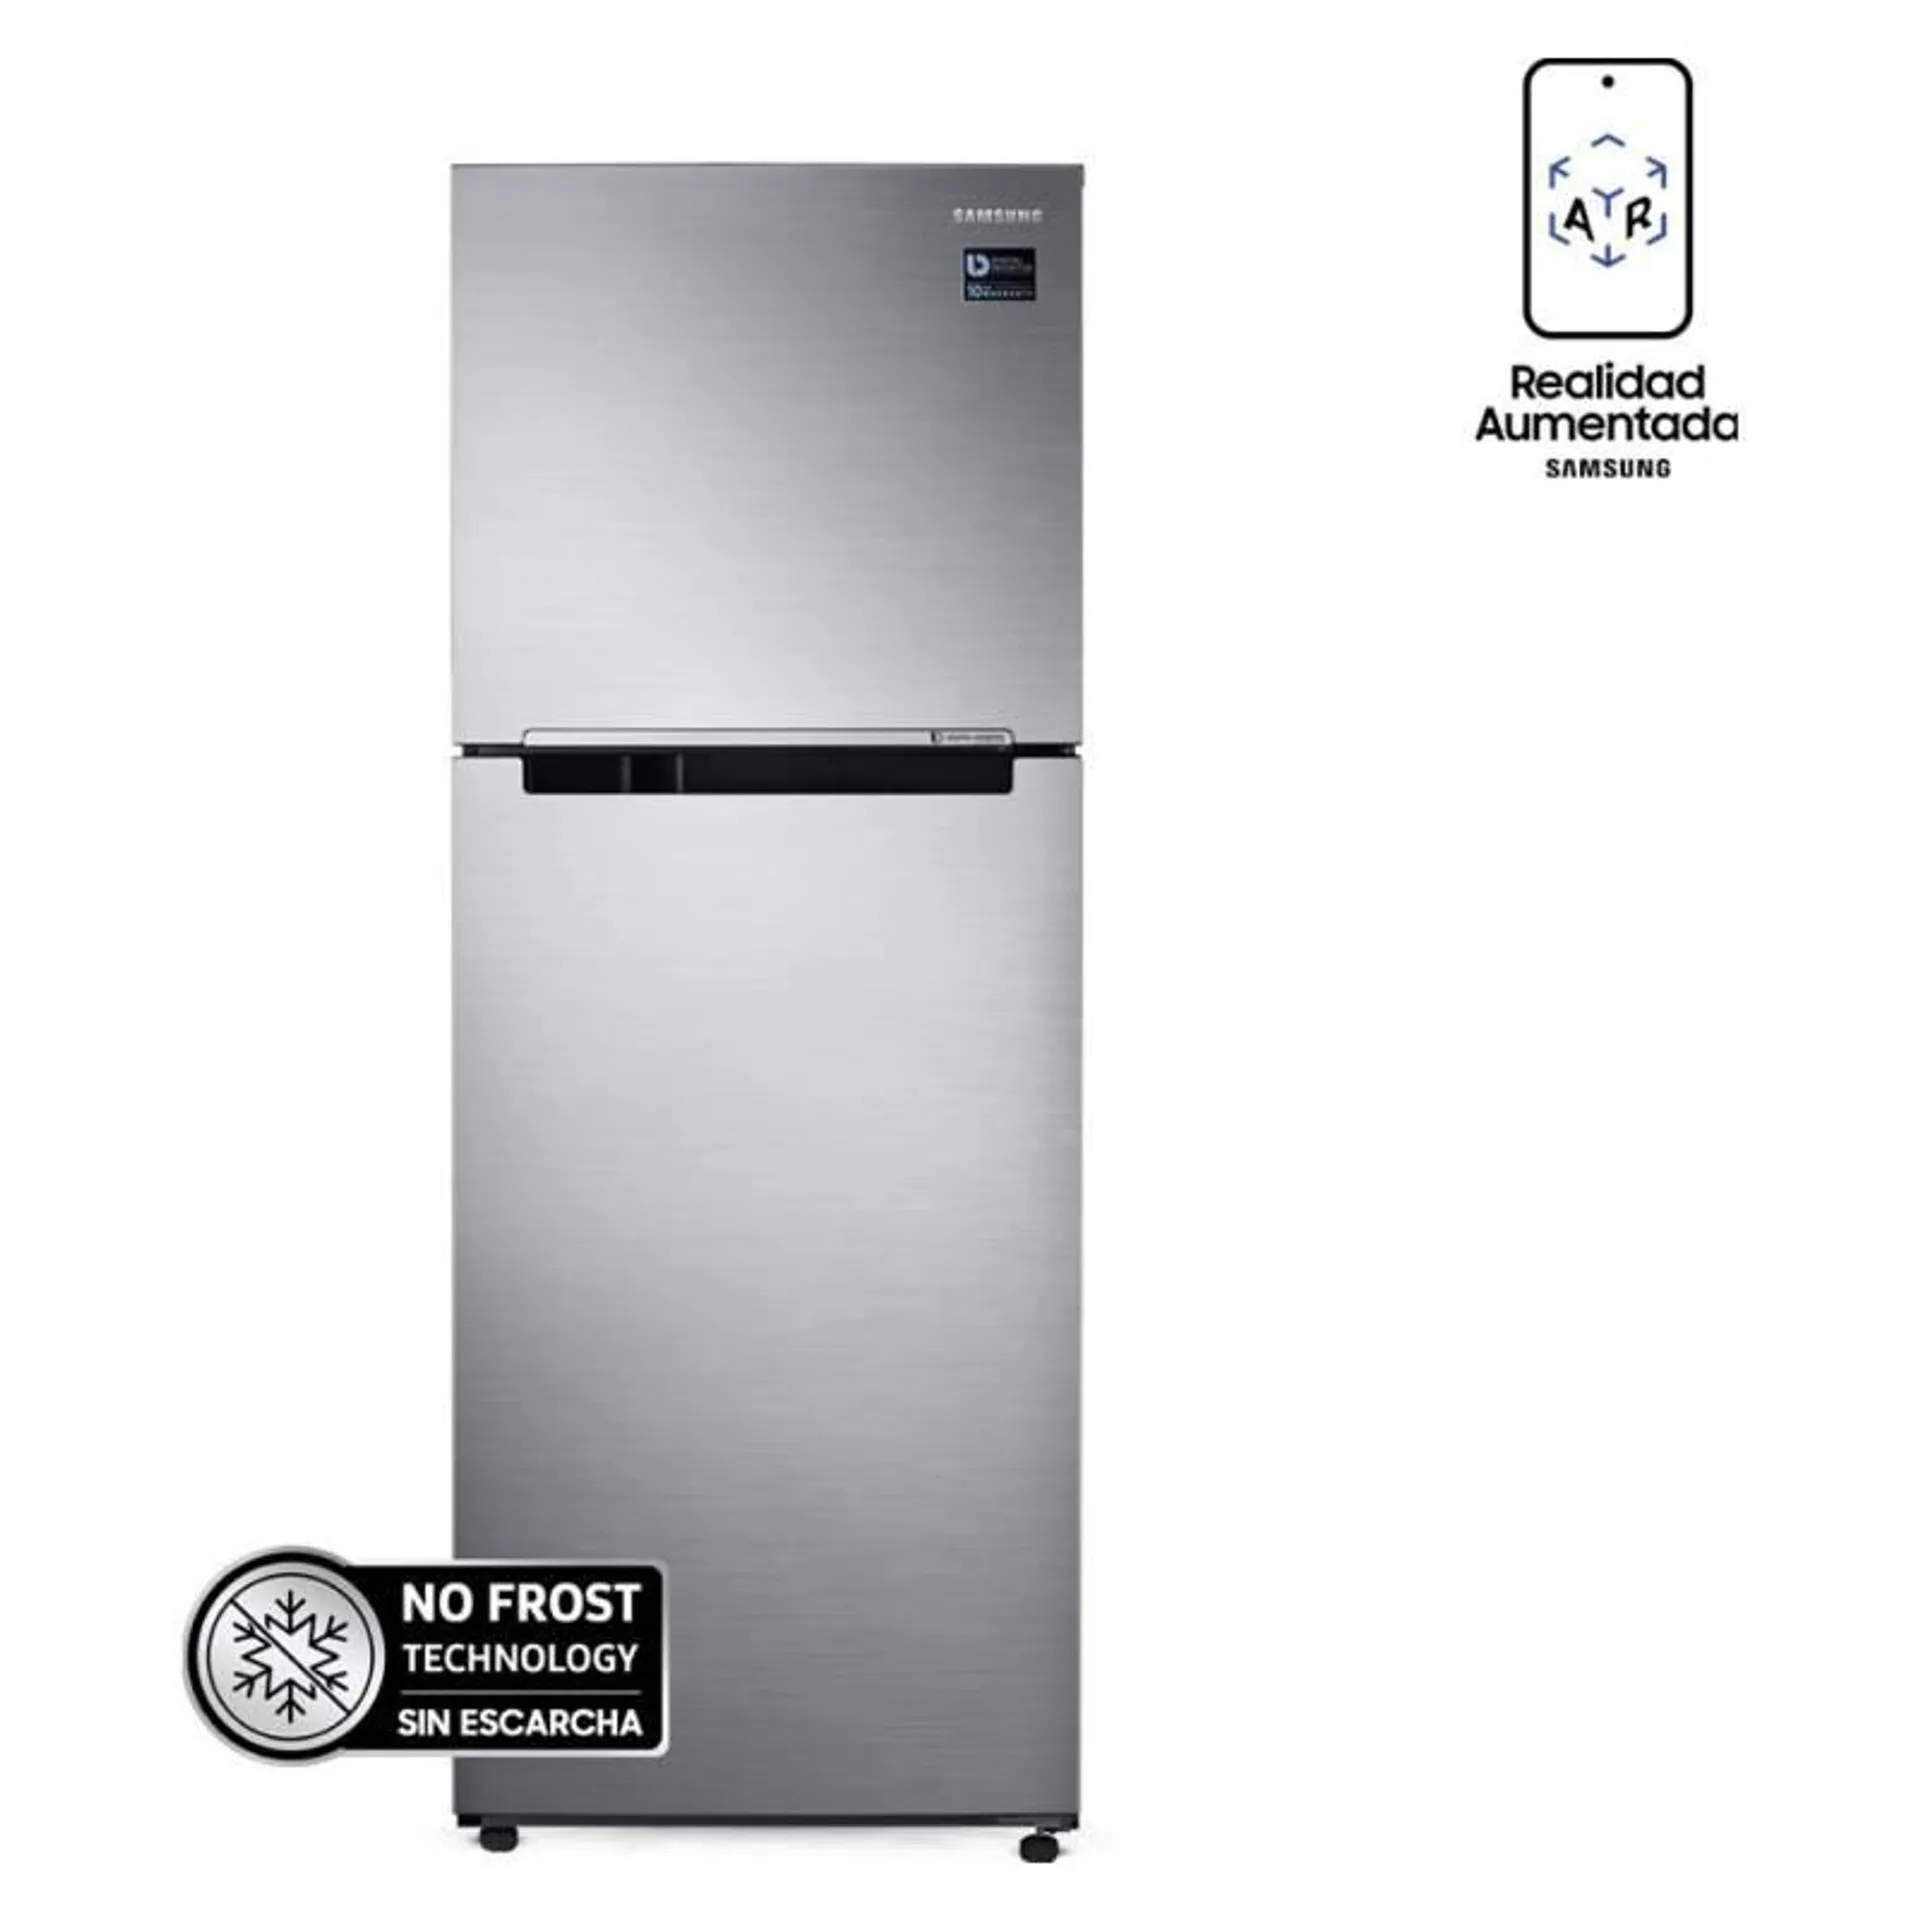 Refrigerador Samsung No Frost 300 lt RT29K500JS8/ZS